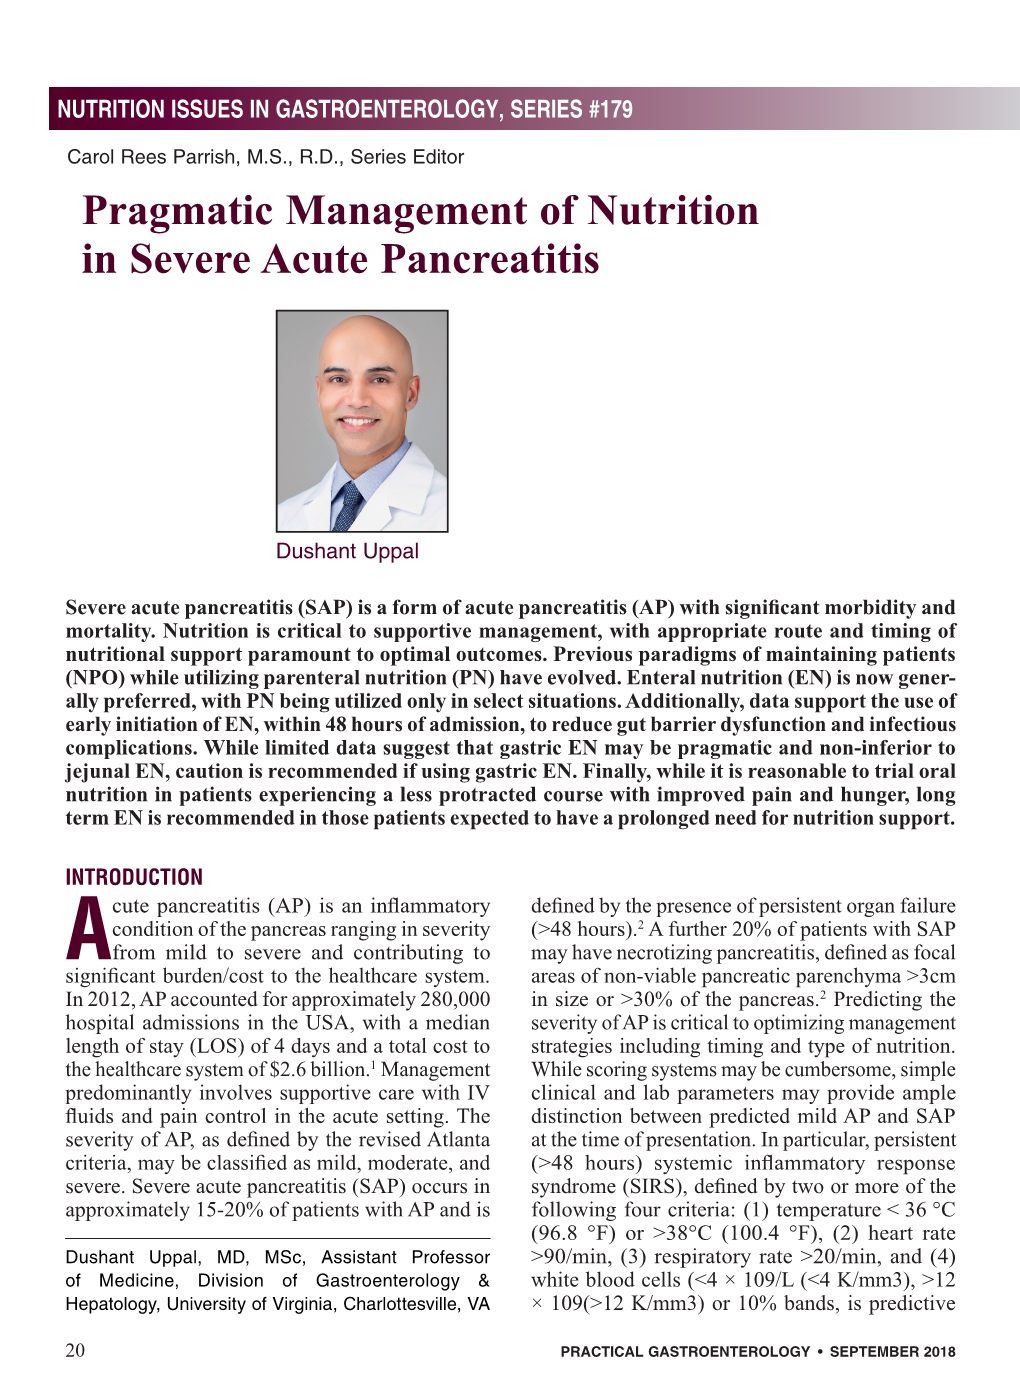 Pragmatic Management of Nutrition in Severe Acute Pancreatitis